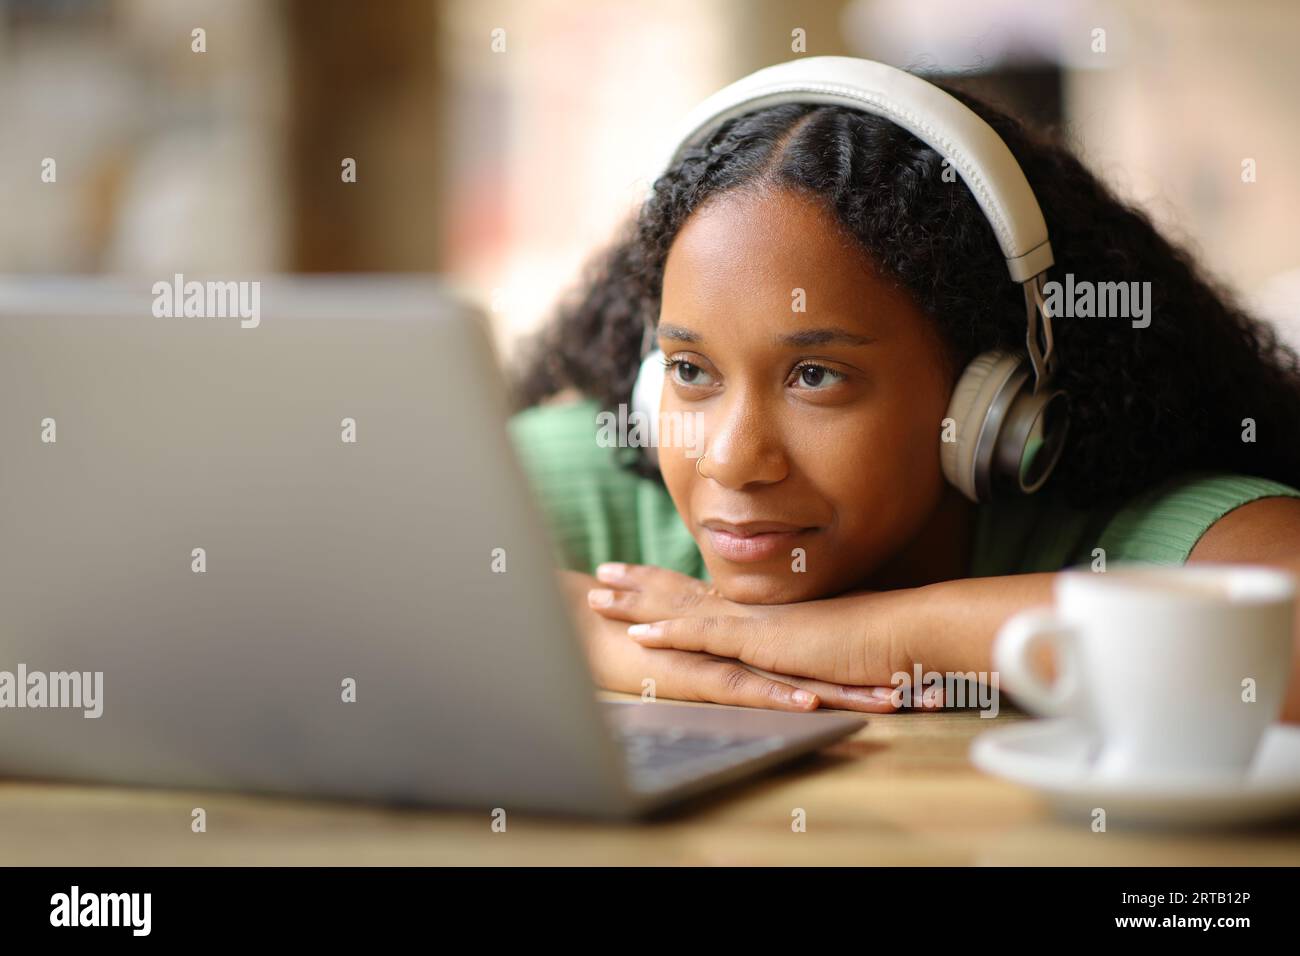 Black woman wearing headphone watching media on laptop in a restaurant terrace Stock Photo